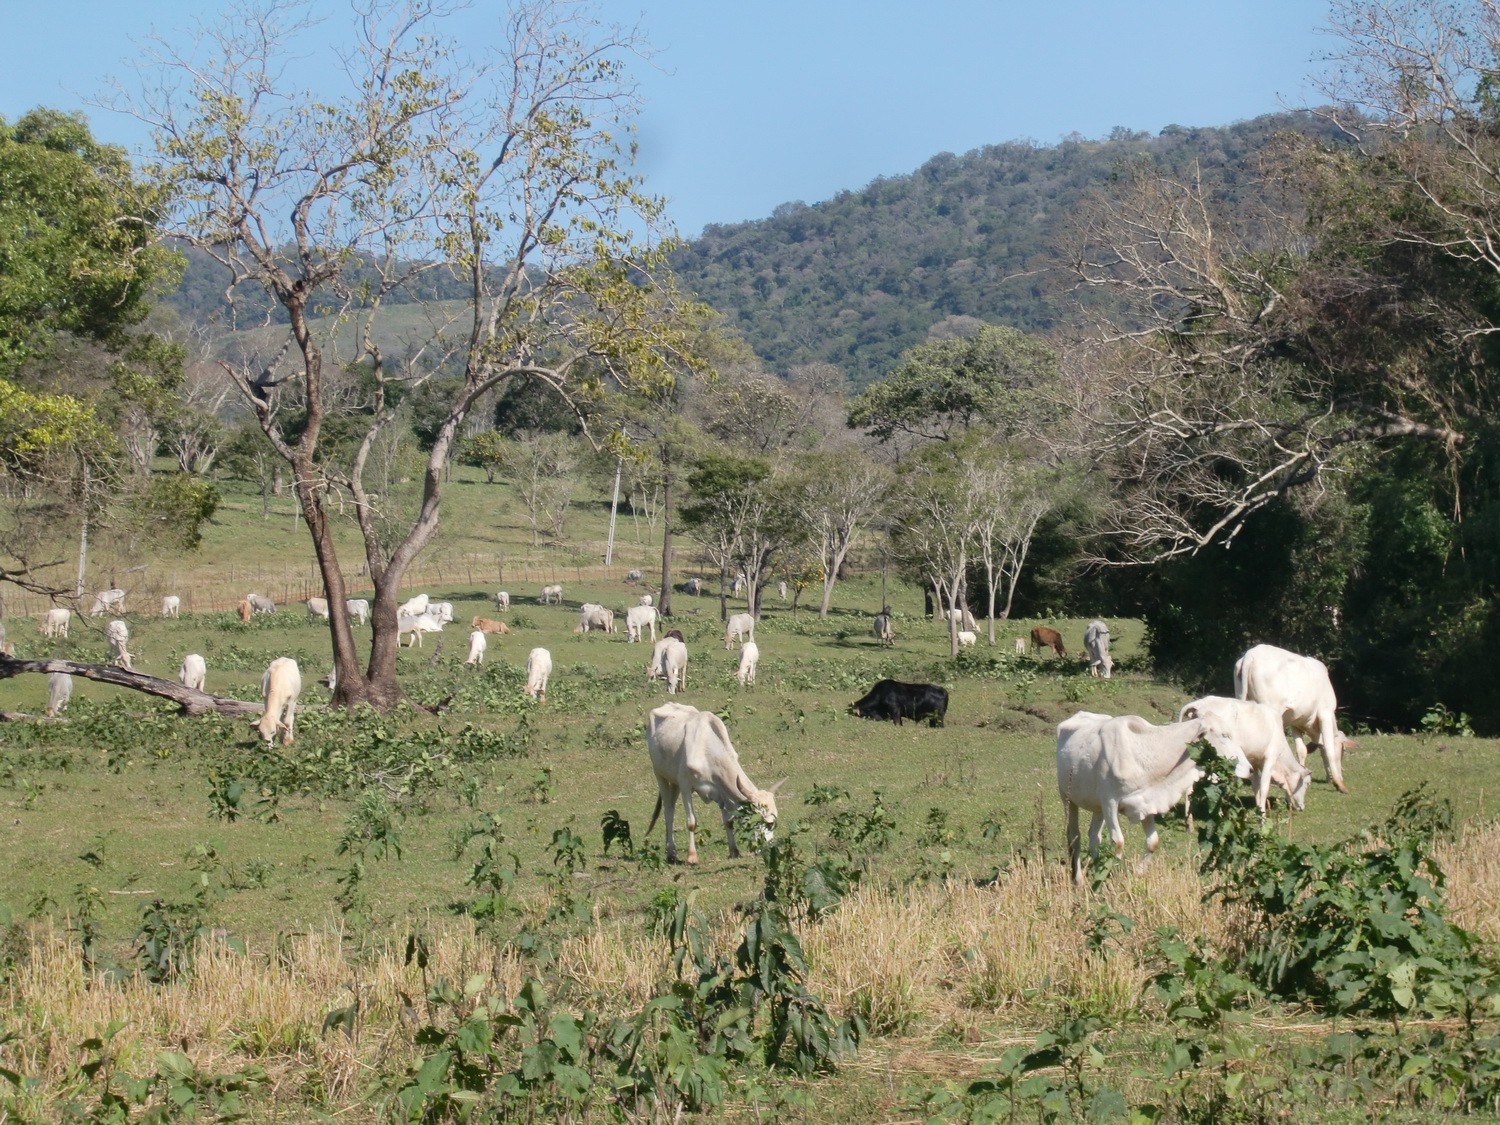 Cows in the Yvytyruzu sanctuary